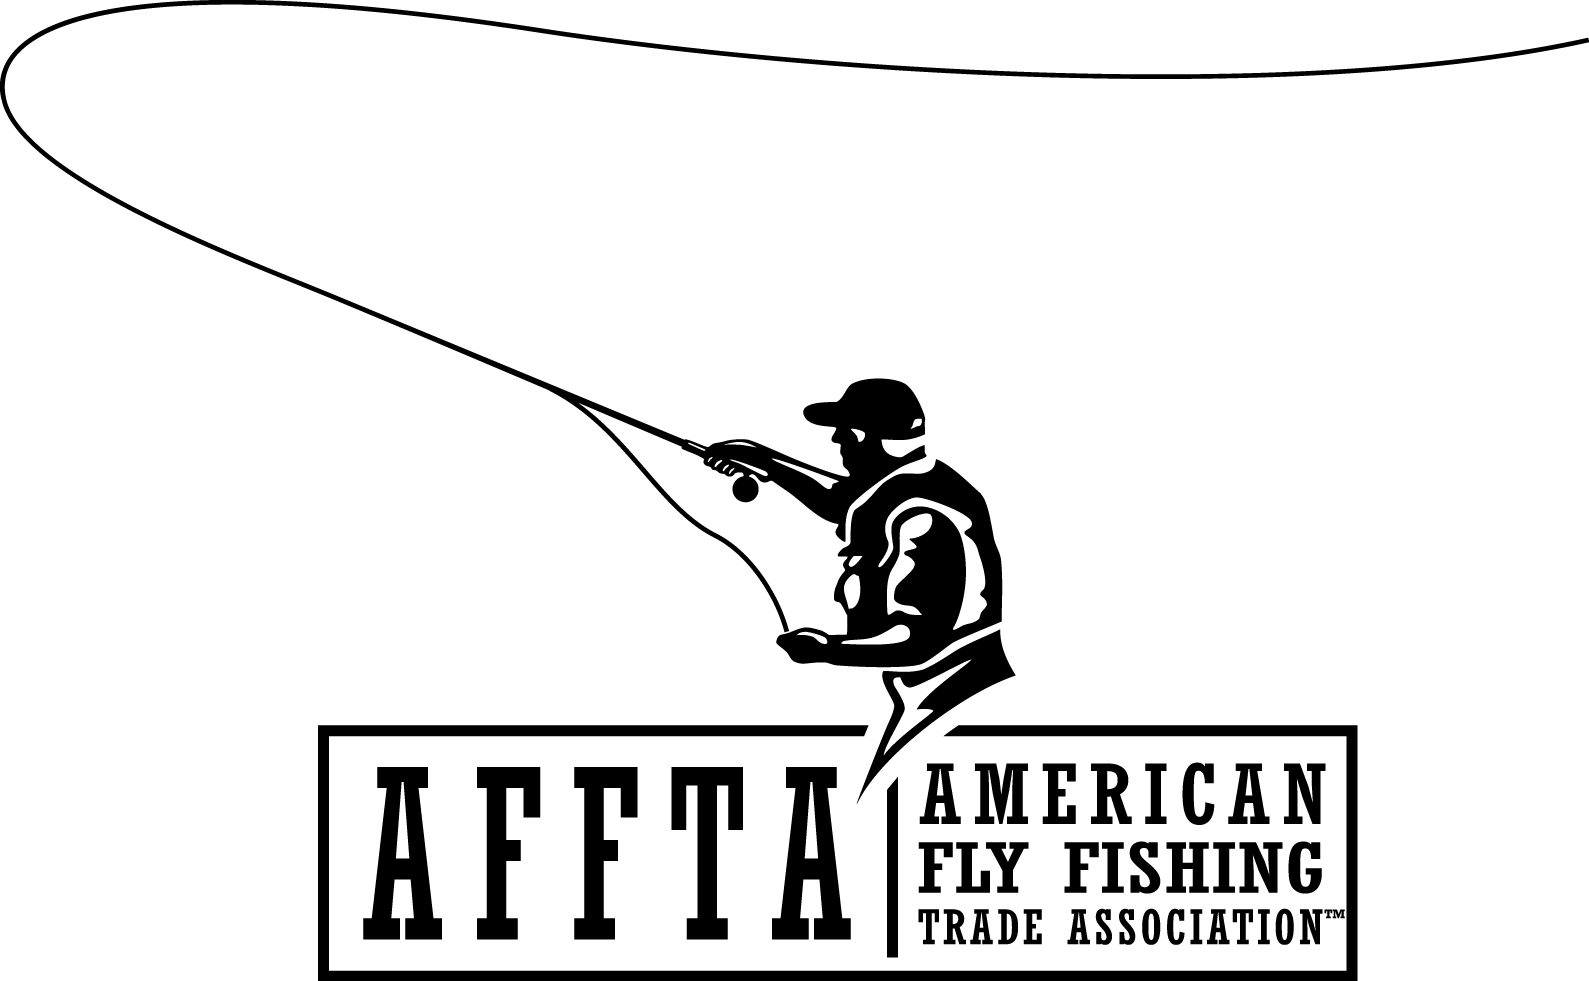 American Fly Fishing Trade Association Logo photo - 1